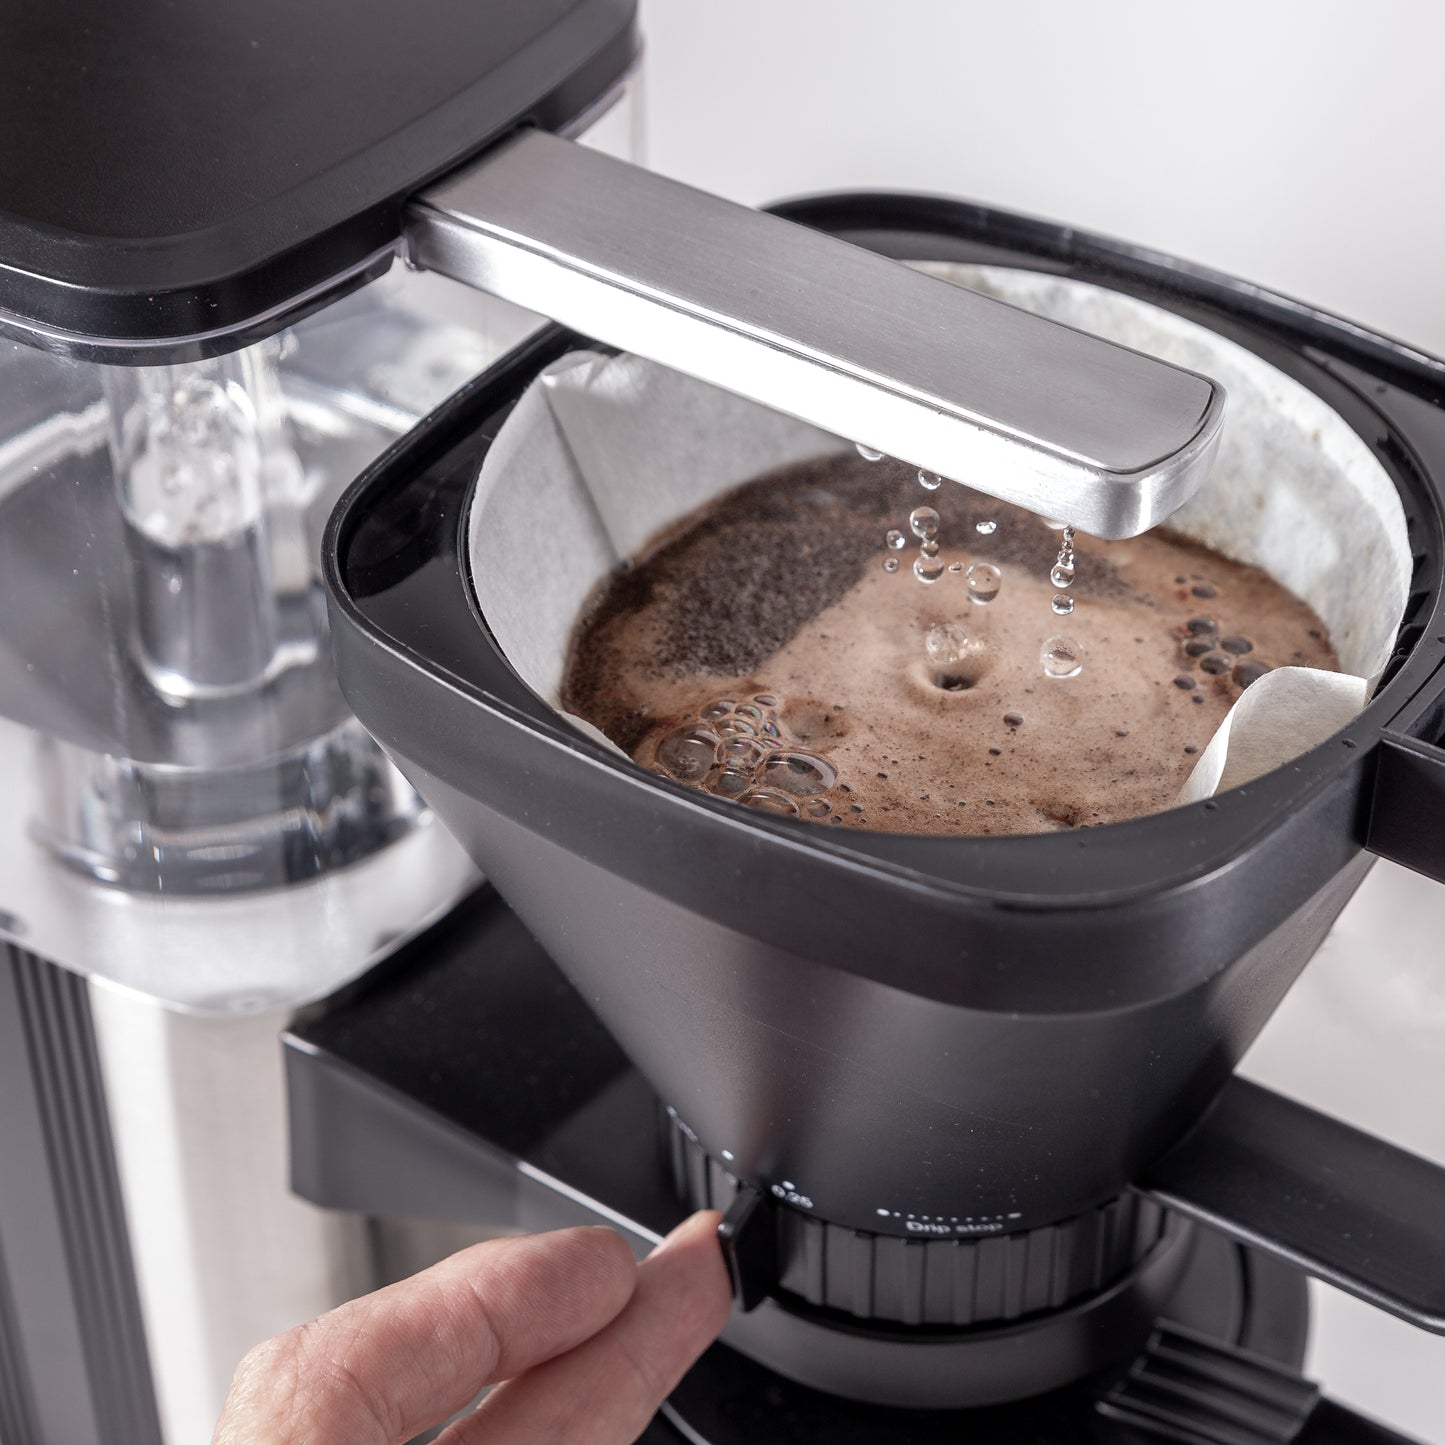 Filterkaffeemaschine PERFECT CAFE - BOB HOME - modern lifestyle products